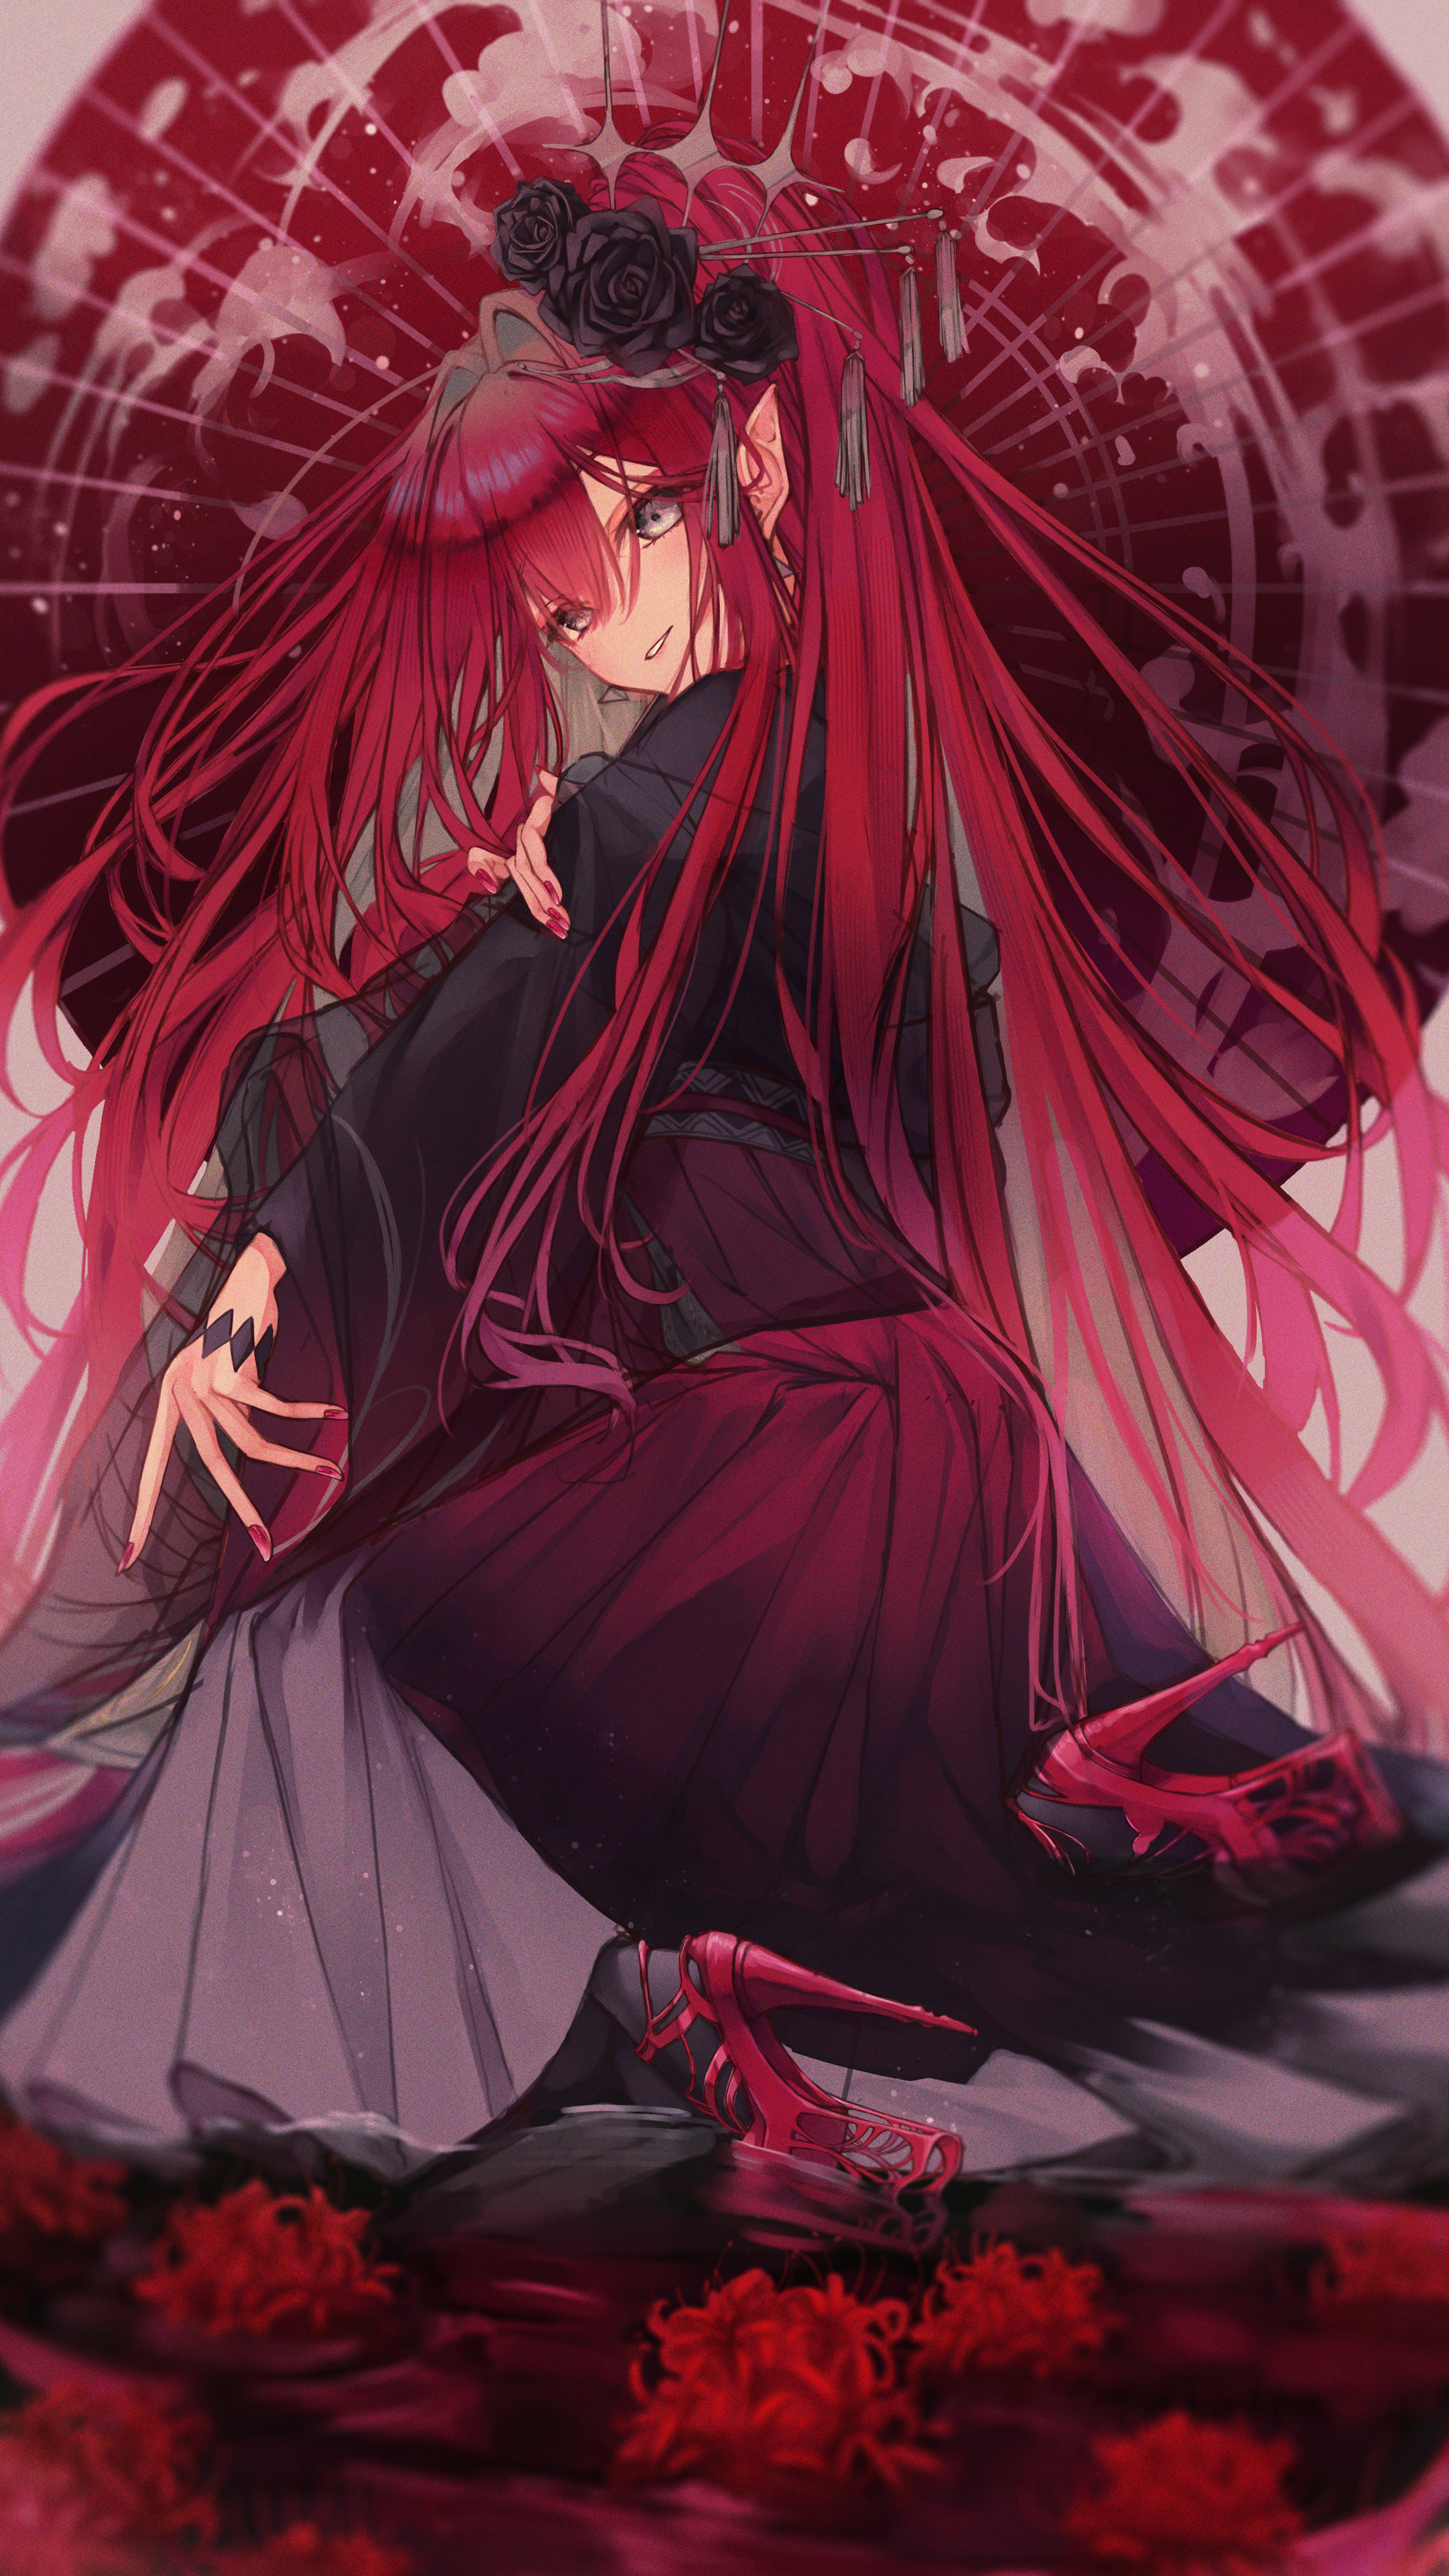 Anime 2480x4409 Fate series Fate/Grand Order Baobhan Sith anime girls redhead flowers heels umbrella pointy ears